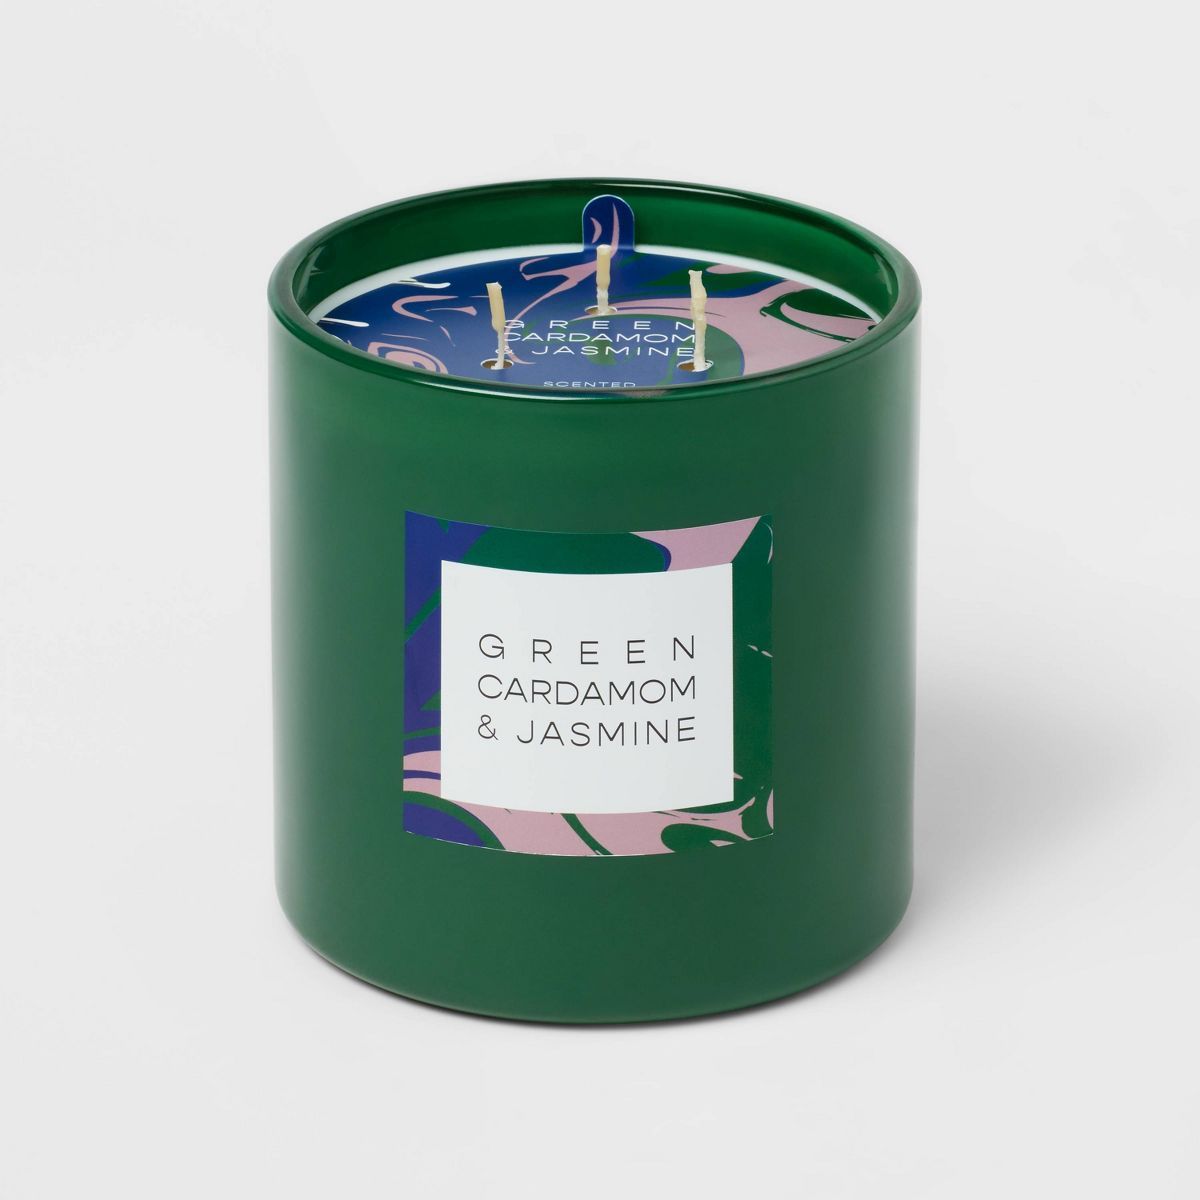 28oz Glass Cardamom & Jasmine Candle Green - Opalhouse™ | Target